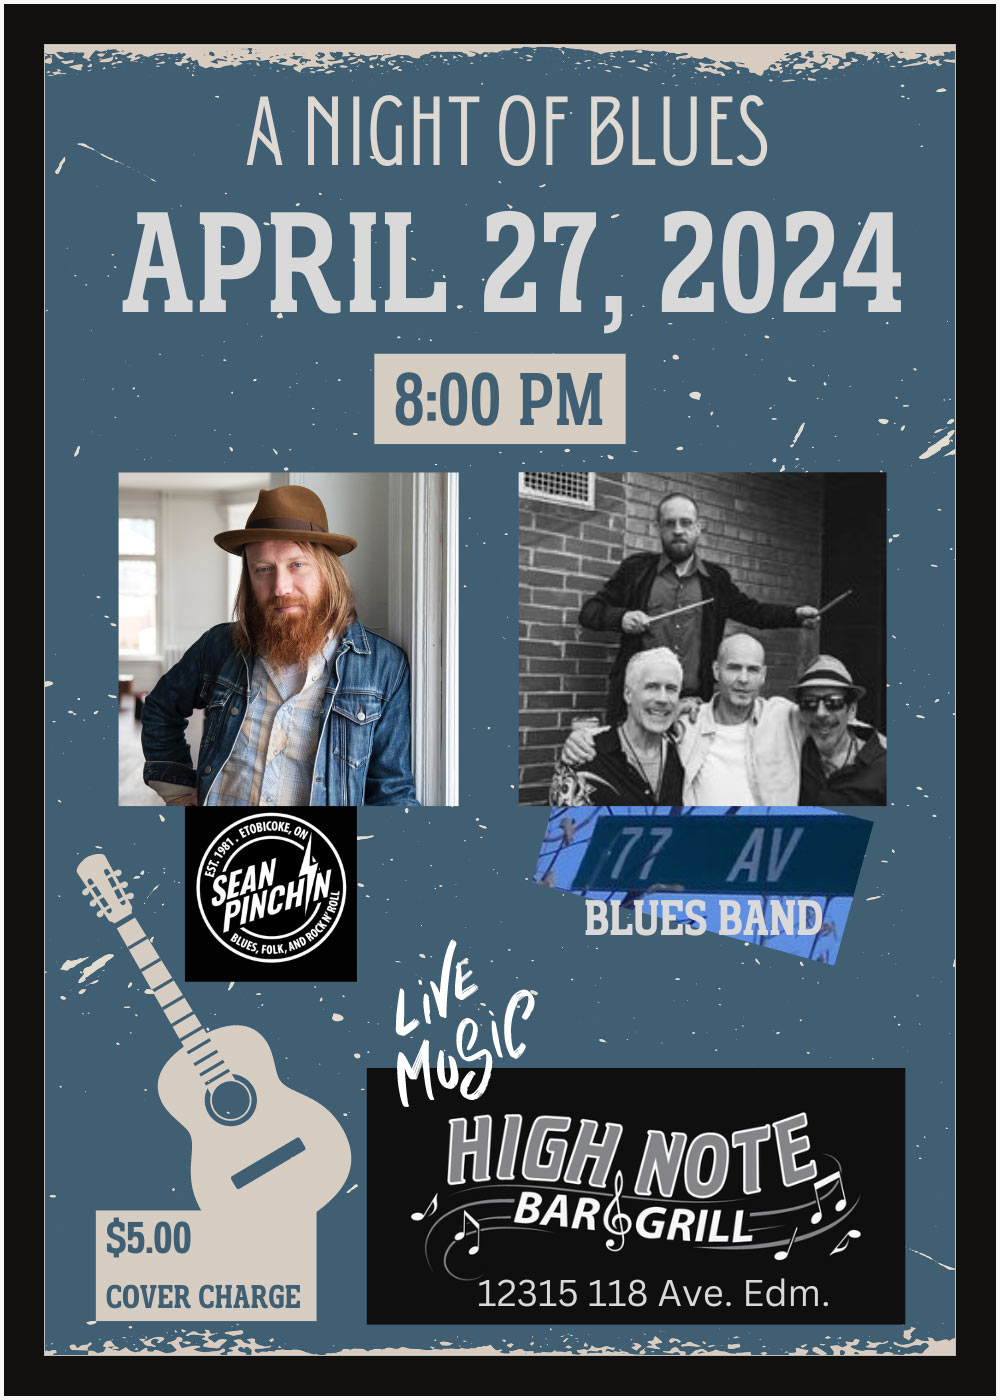 April 27, 2024: A Night of Blues